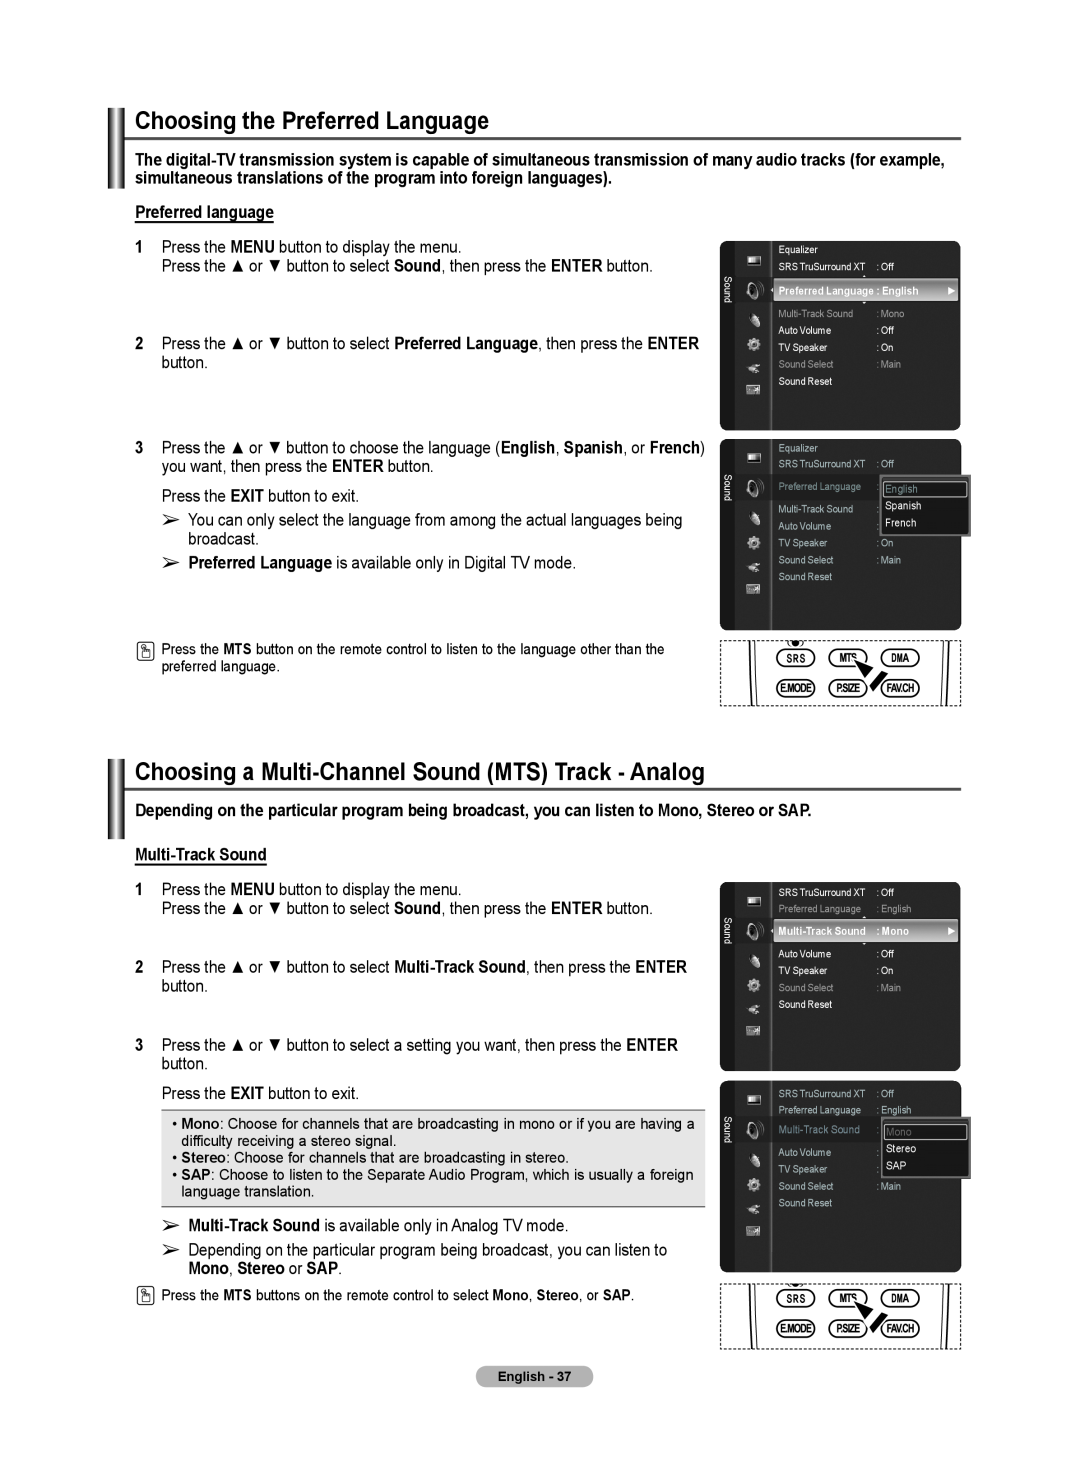 Samsung 510 Choosing the Preferred Language, Choosing a Multi-Channel Sound MTS Track - Analog, Preferred language 